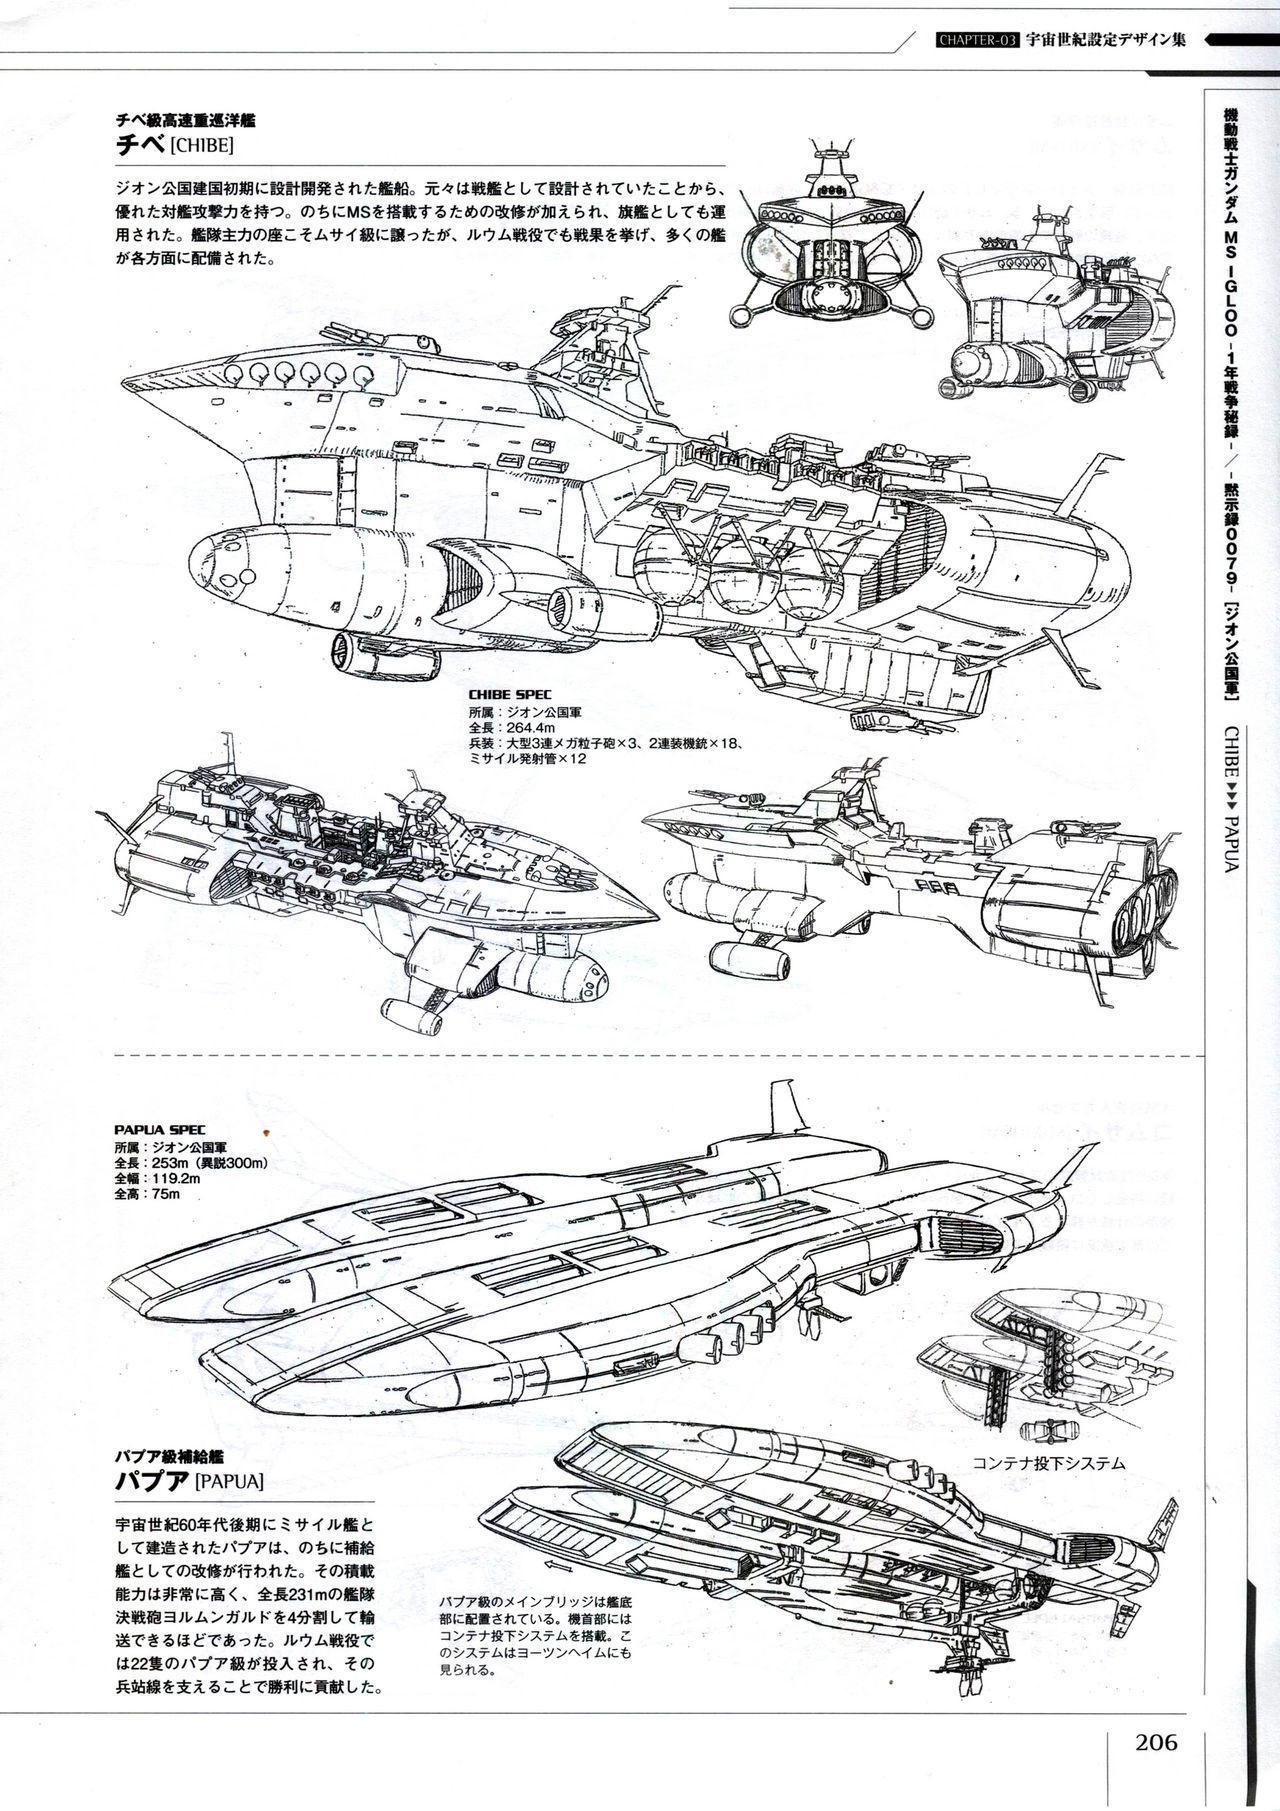 Mobile Suit Gundam - Ship & Aerospace Plane Encyclopedia - Revised Edition 211